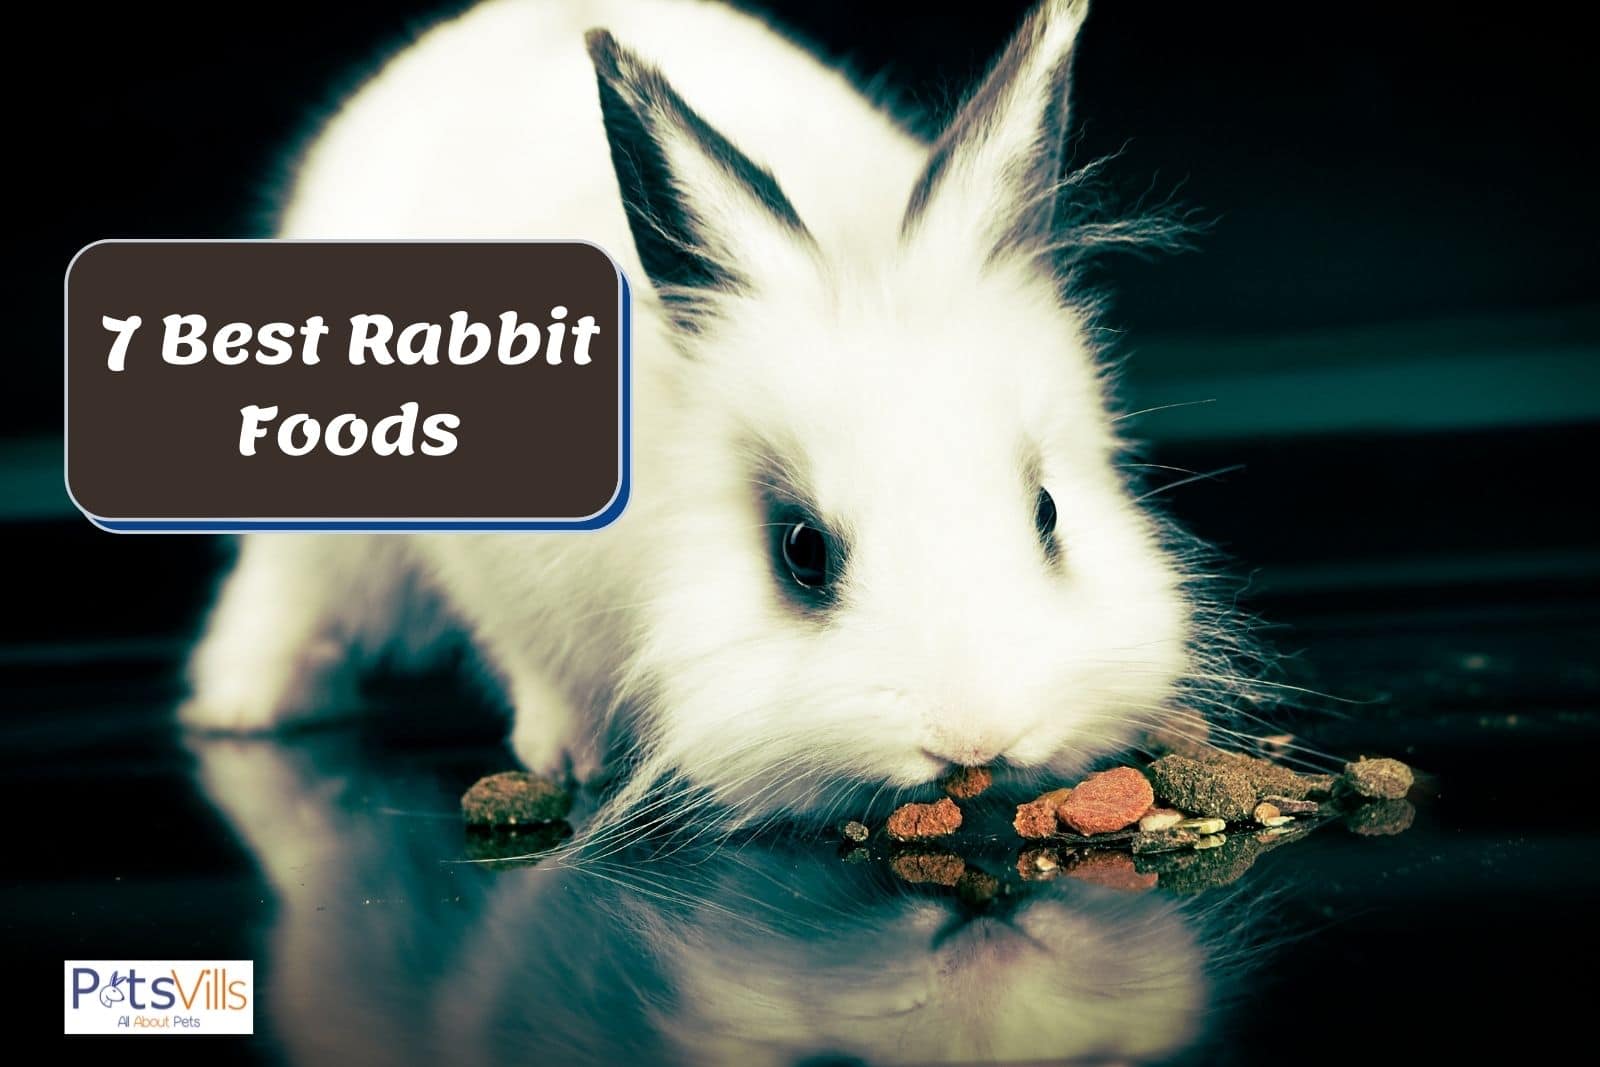 best rabbit foods in front of him to eat